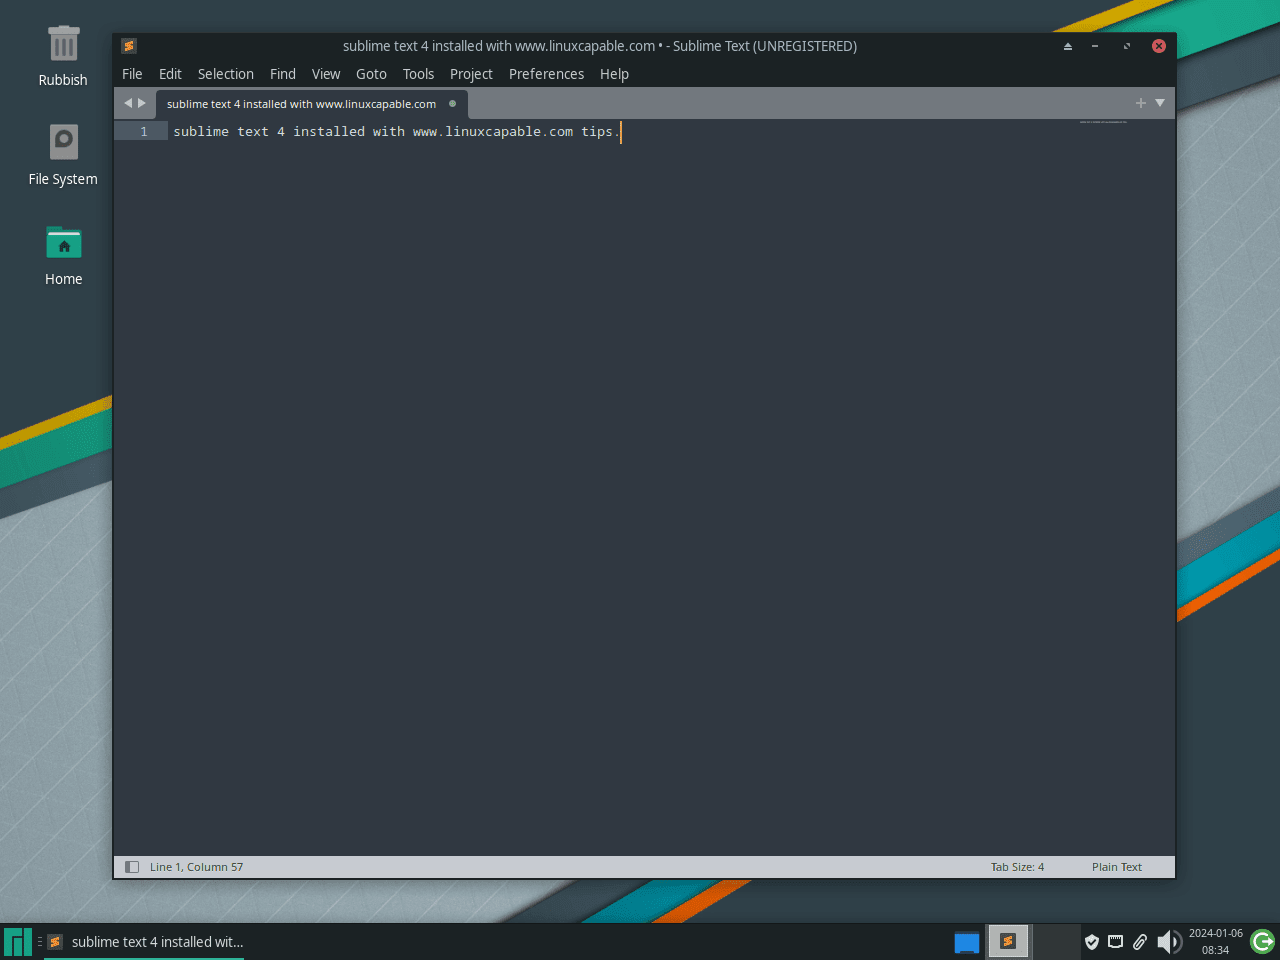 Open Sublime Text 4 application on Manjaro Linux desktop.